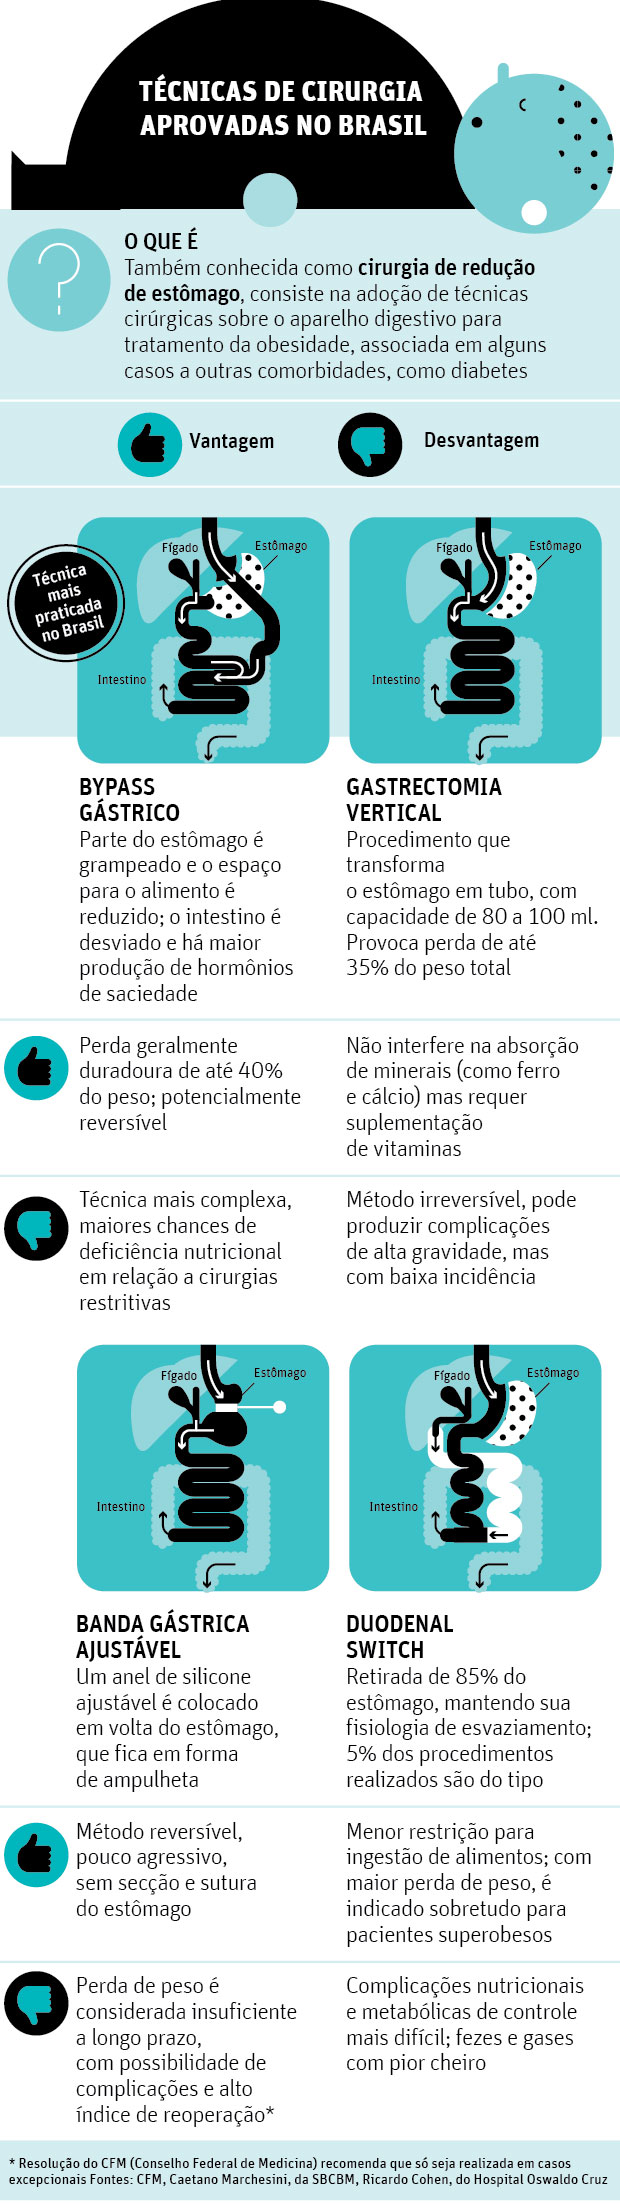 CIRURGIA NO BRASIL Técnicas de cirurgia aprovadas no Brasil